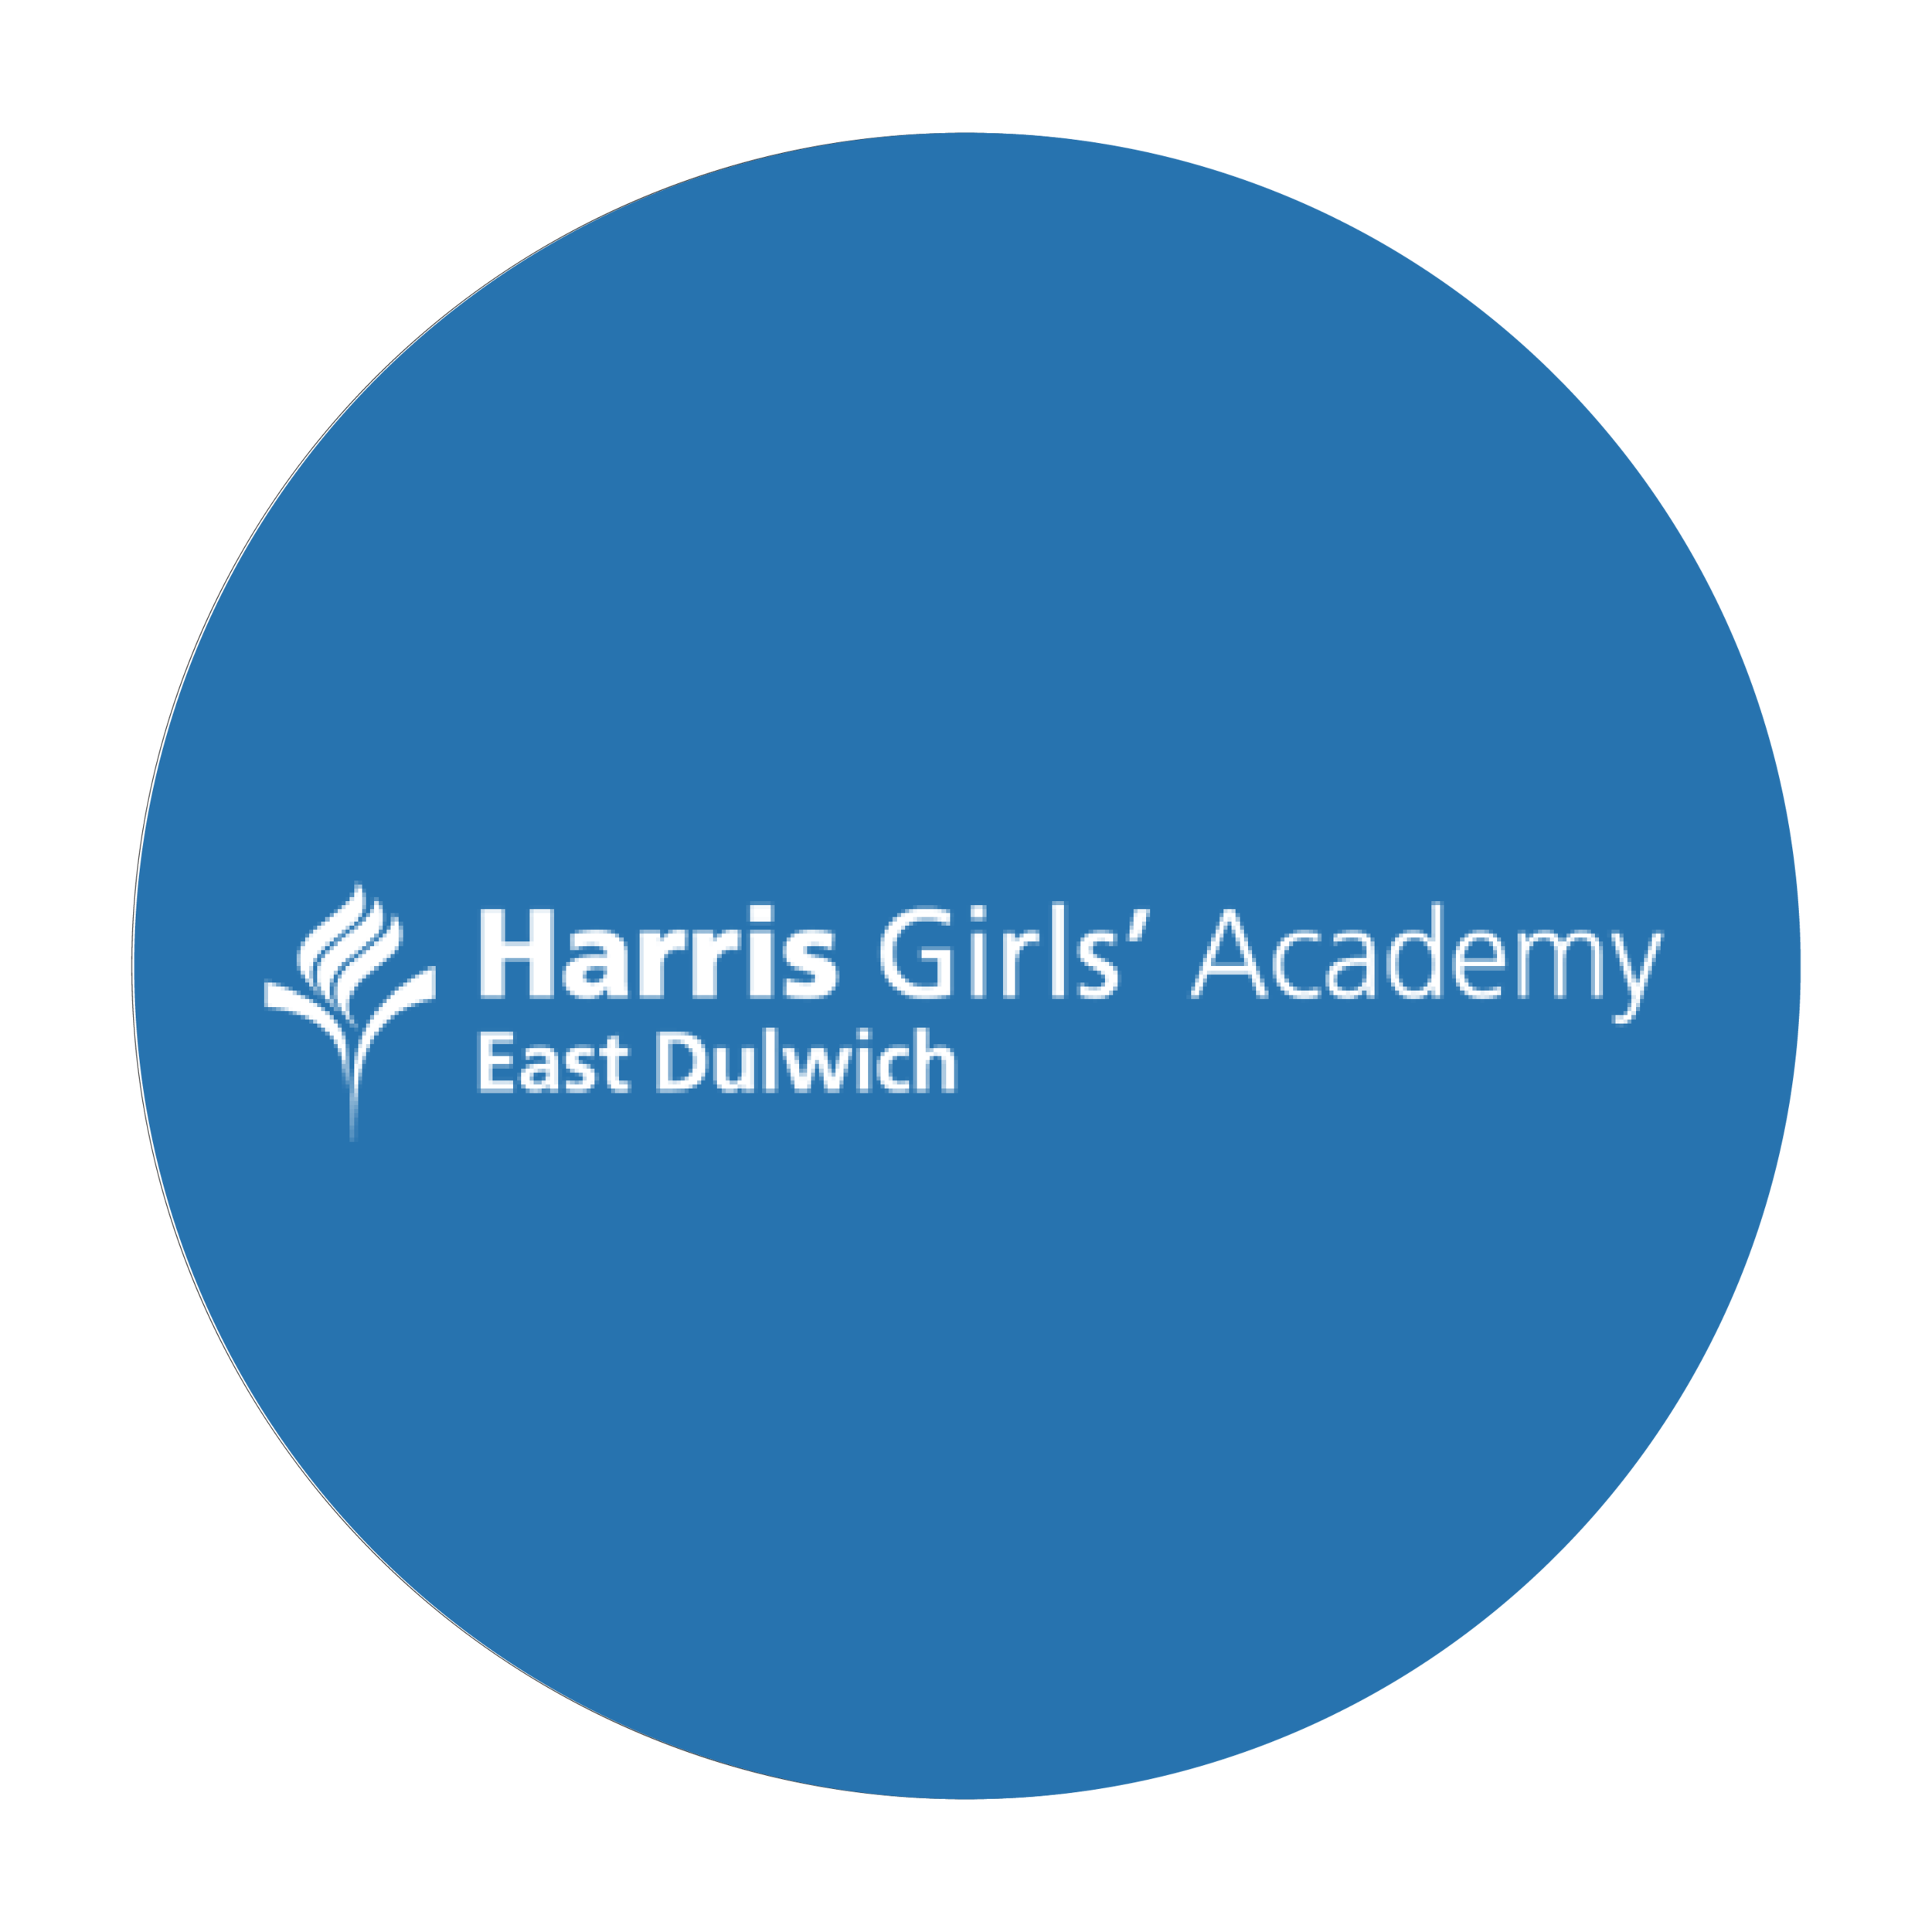 Harris Girls' Academy East Dulwich